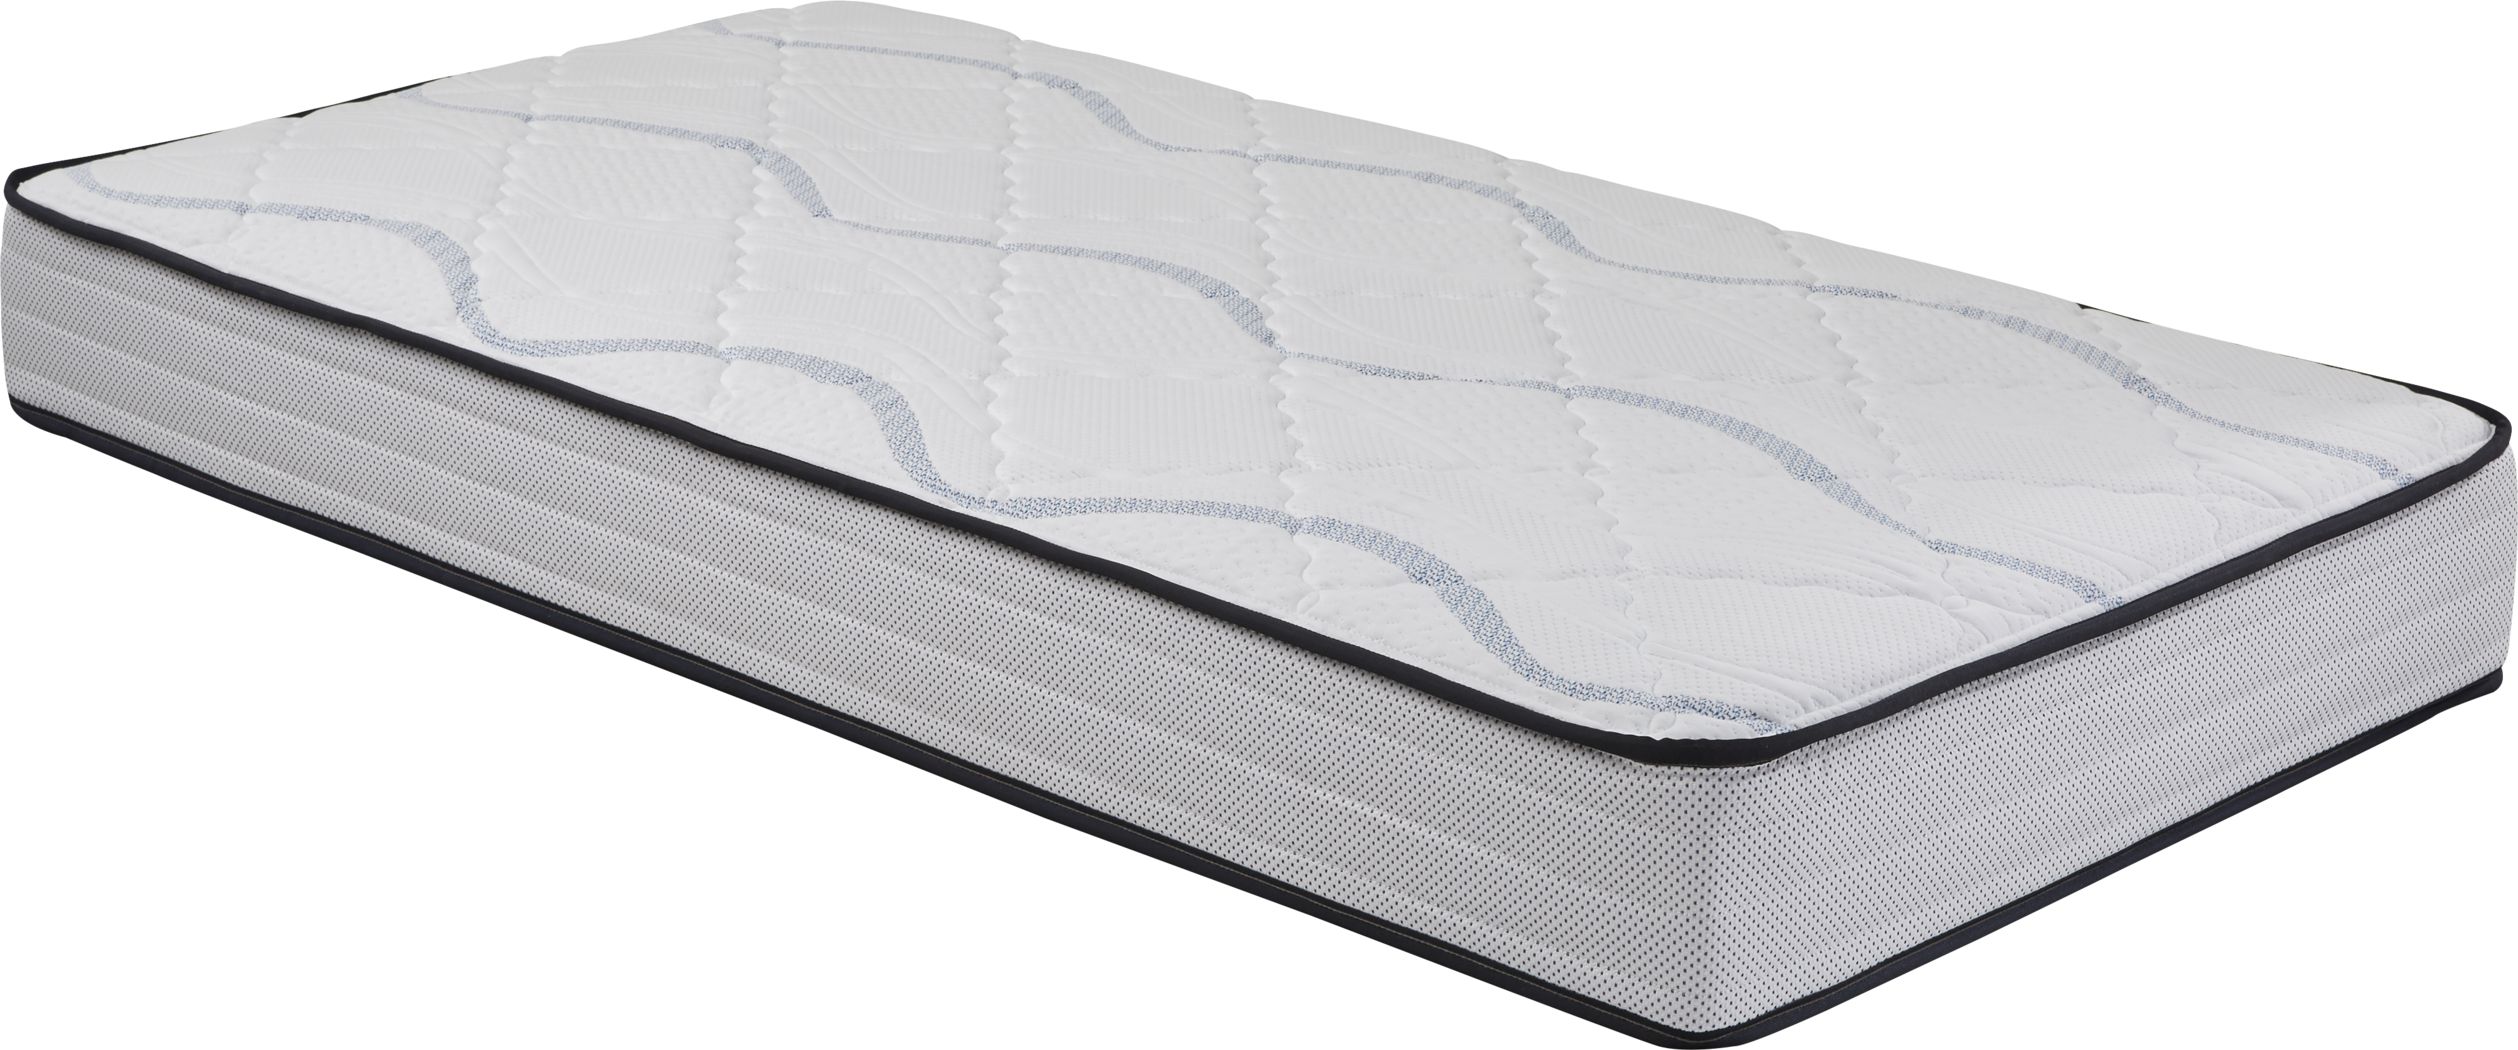 2 foam mattress twin